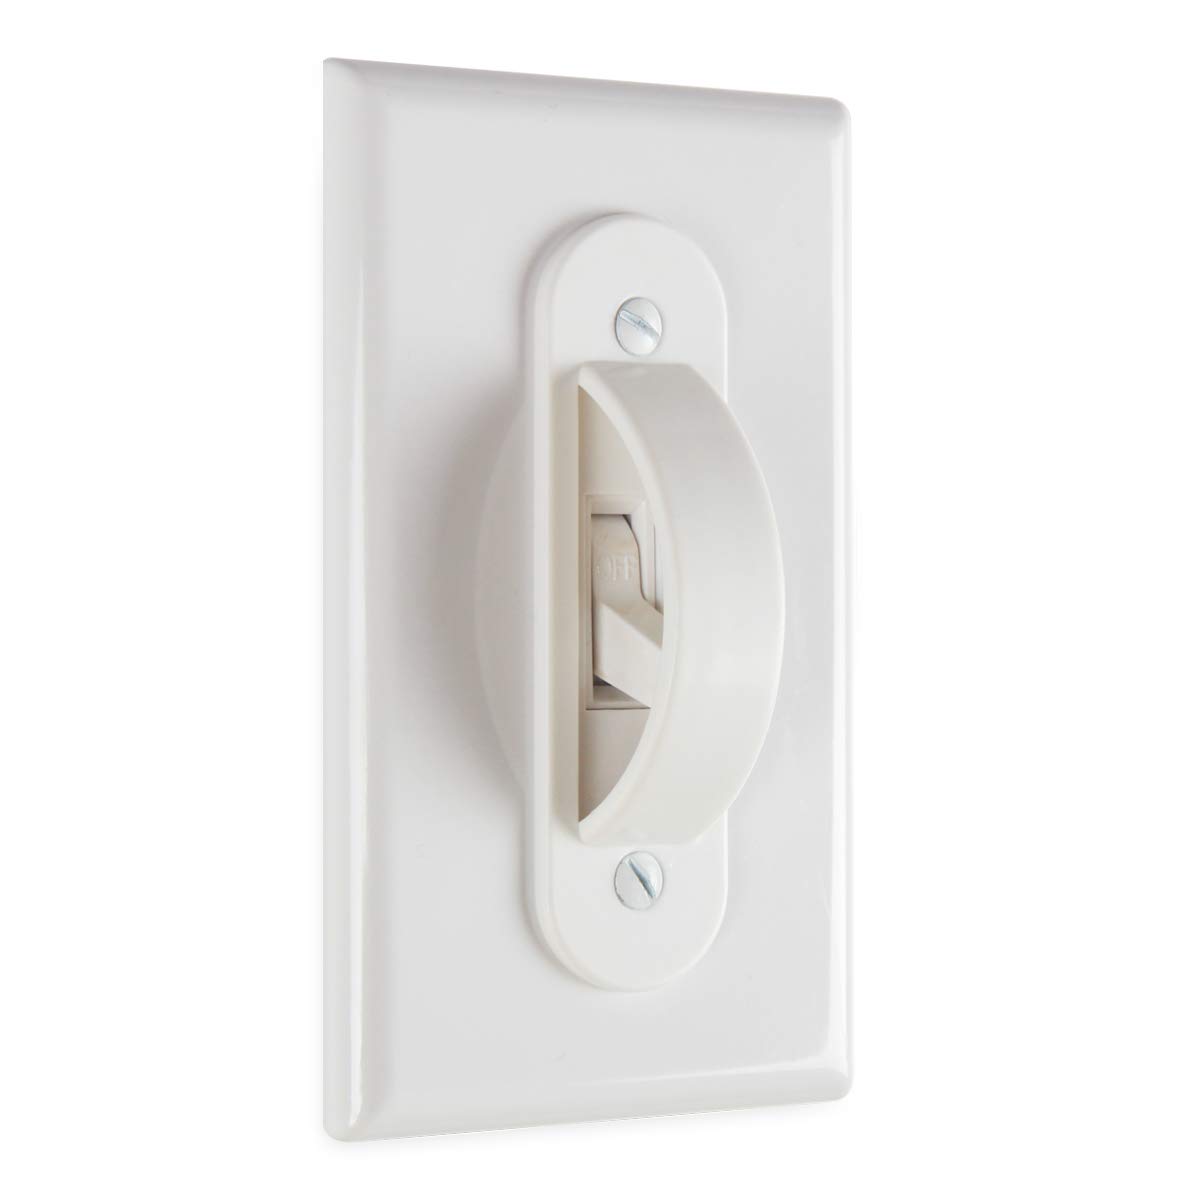 ring floodlight light switch